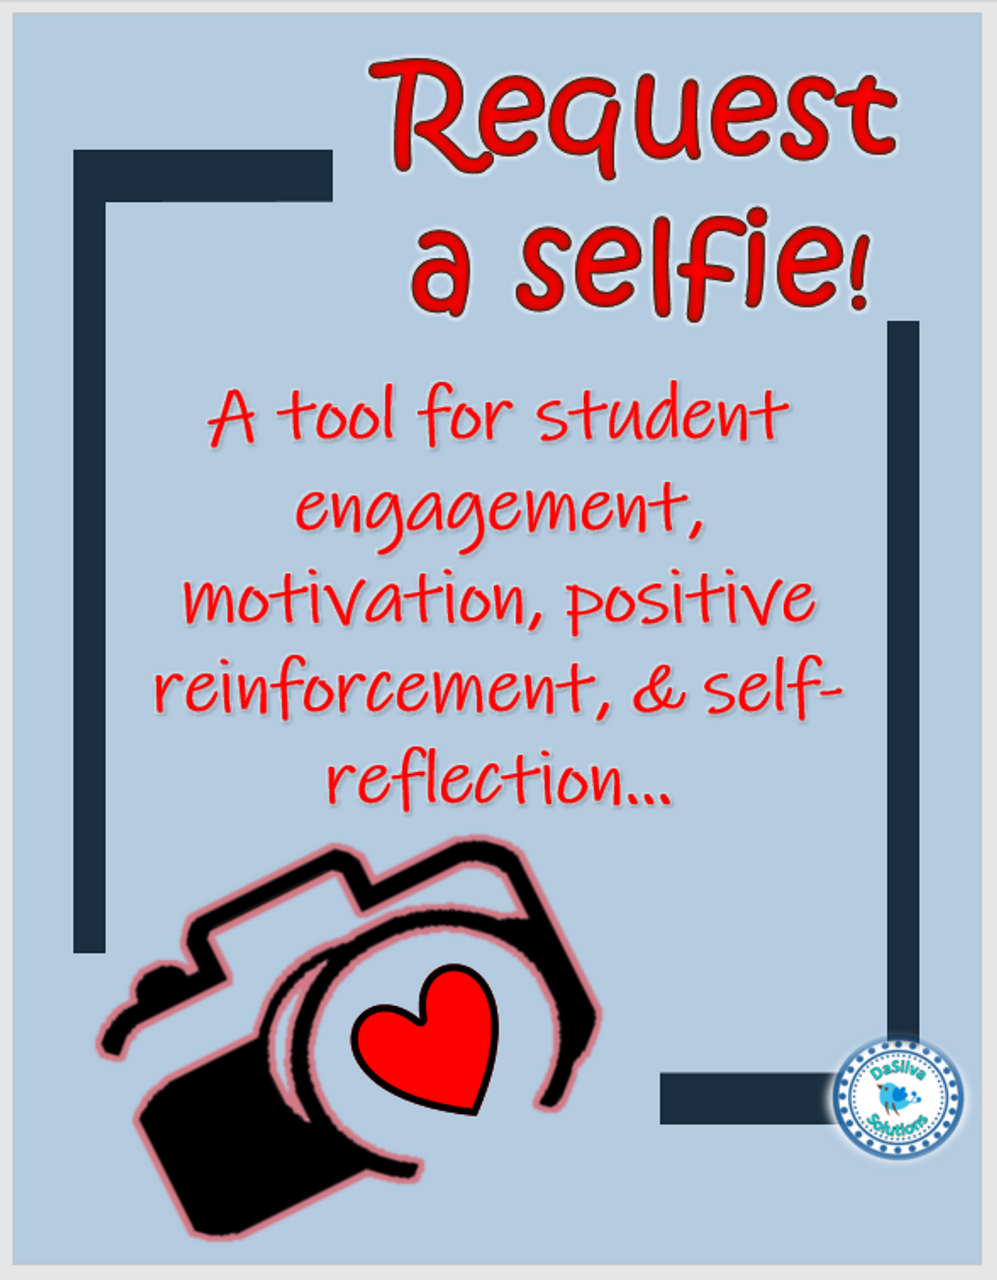 "Request a selfie" student work positive reinforcement tool